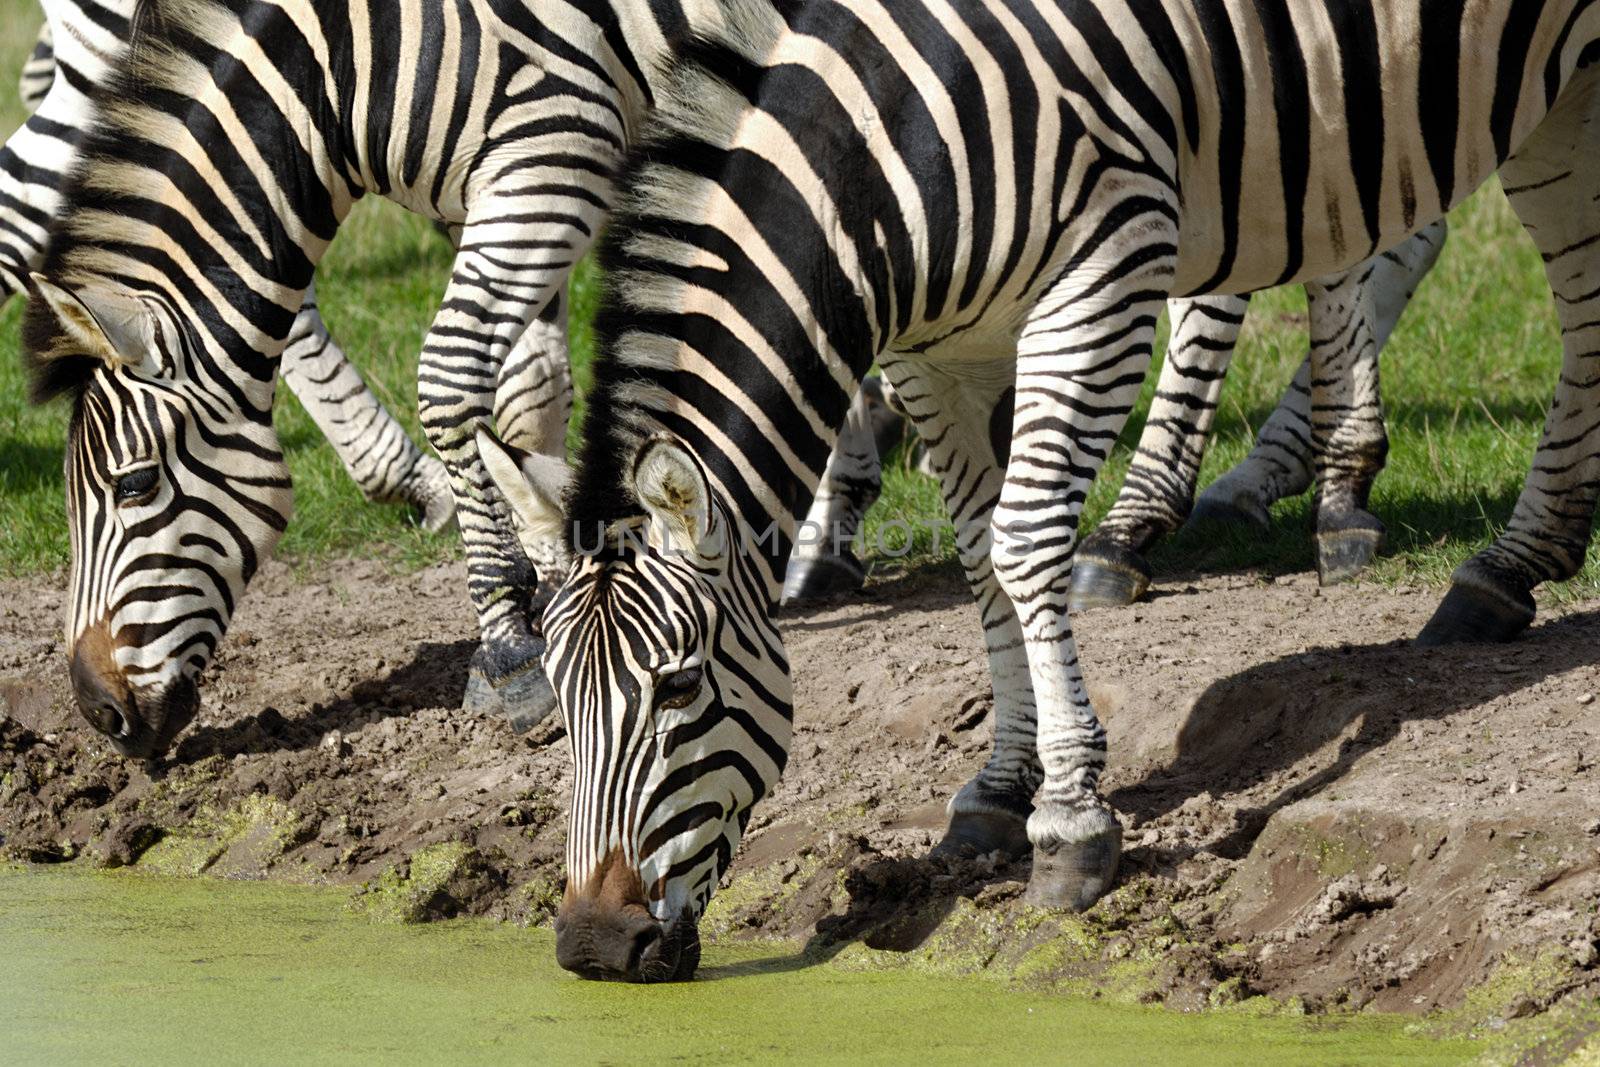 Zebras are dirnking water by cfoto